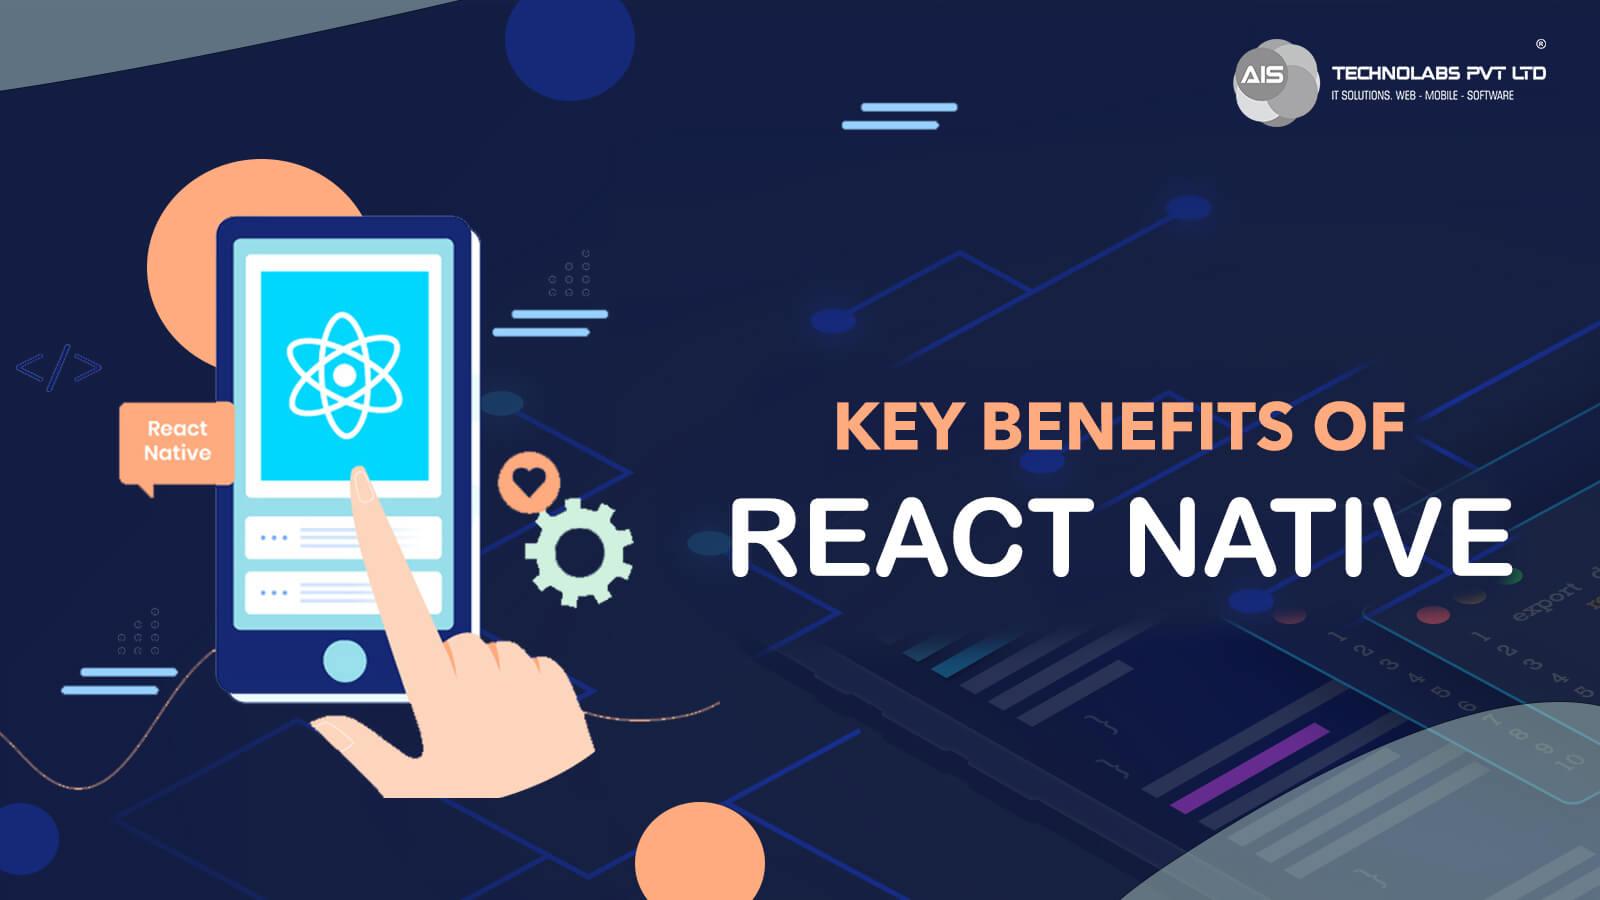 Key benefits of React Native